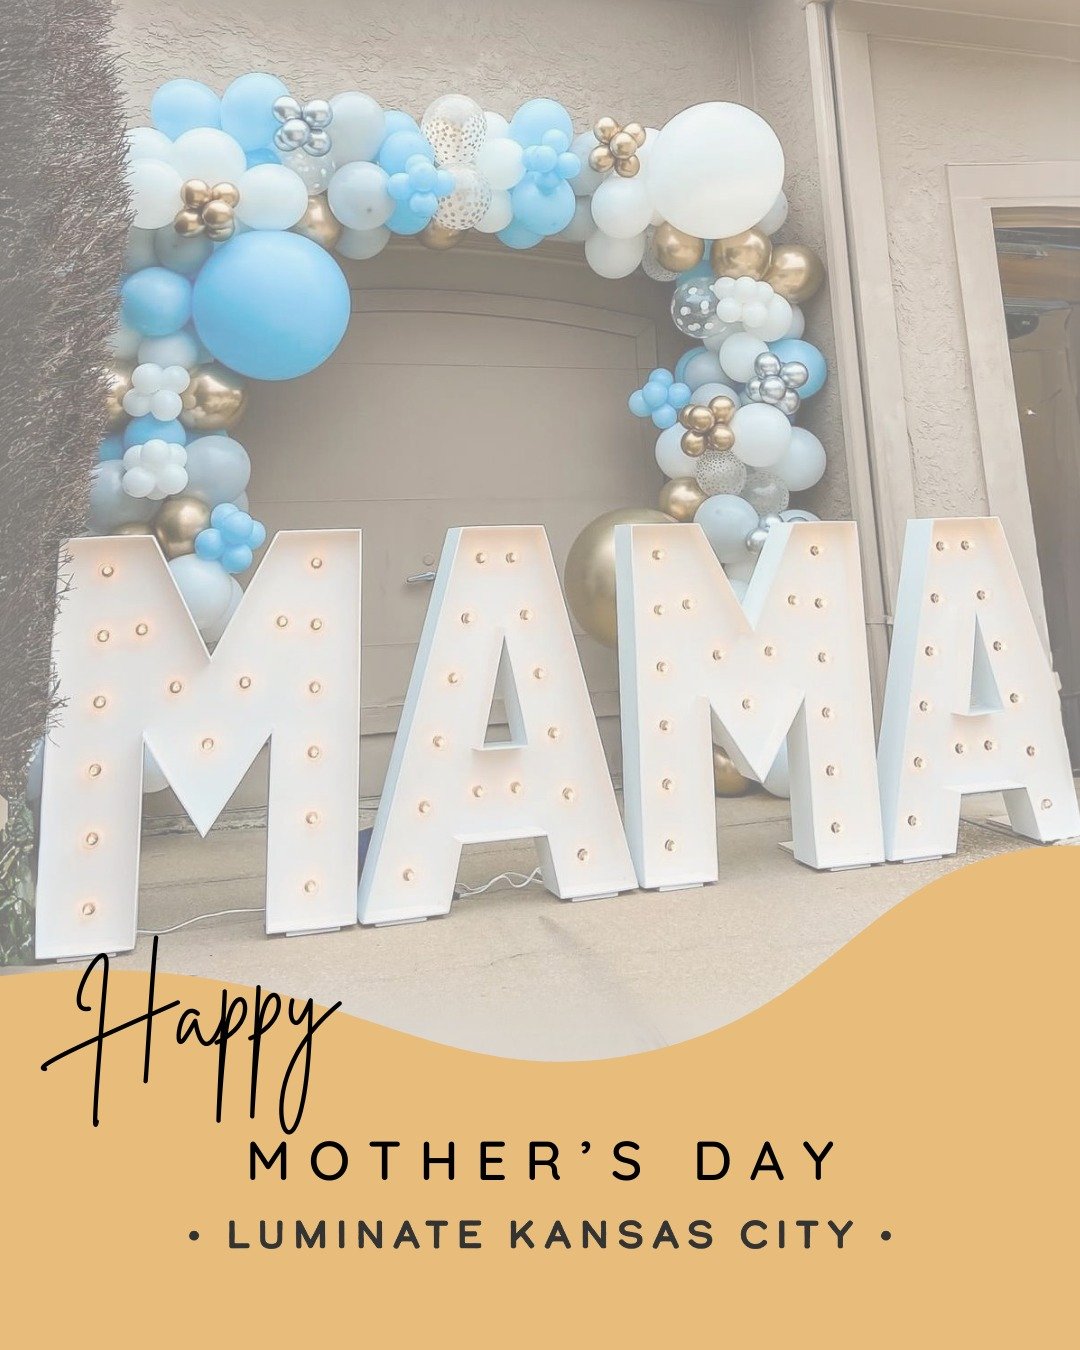 Shining a light on all the amazing moms out there! Happy Mother's Day! ✨

#kansascityevents #kansascitywedding #KCweddingvendors #marqueelights #KansasCityMo #kcevents